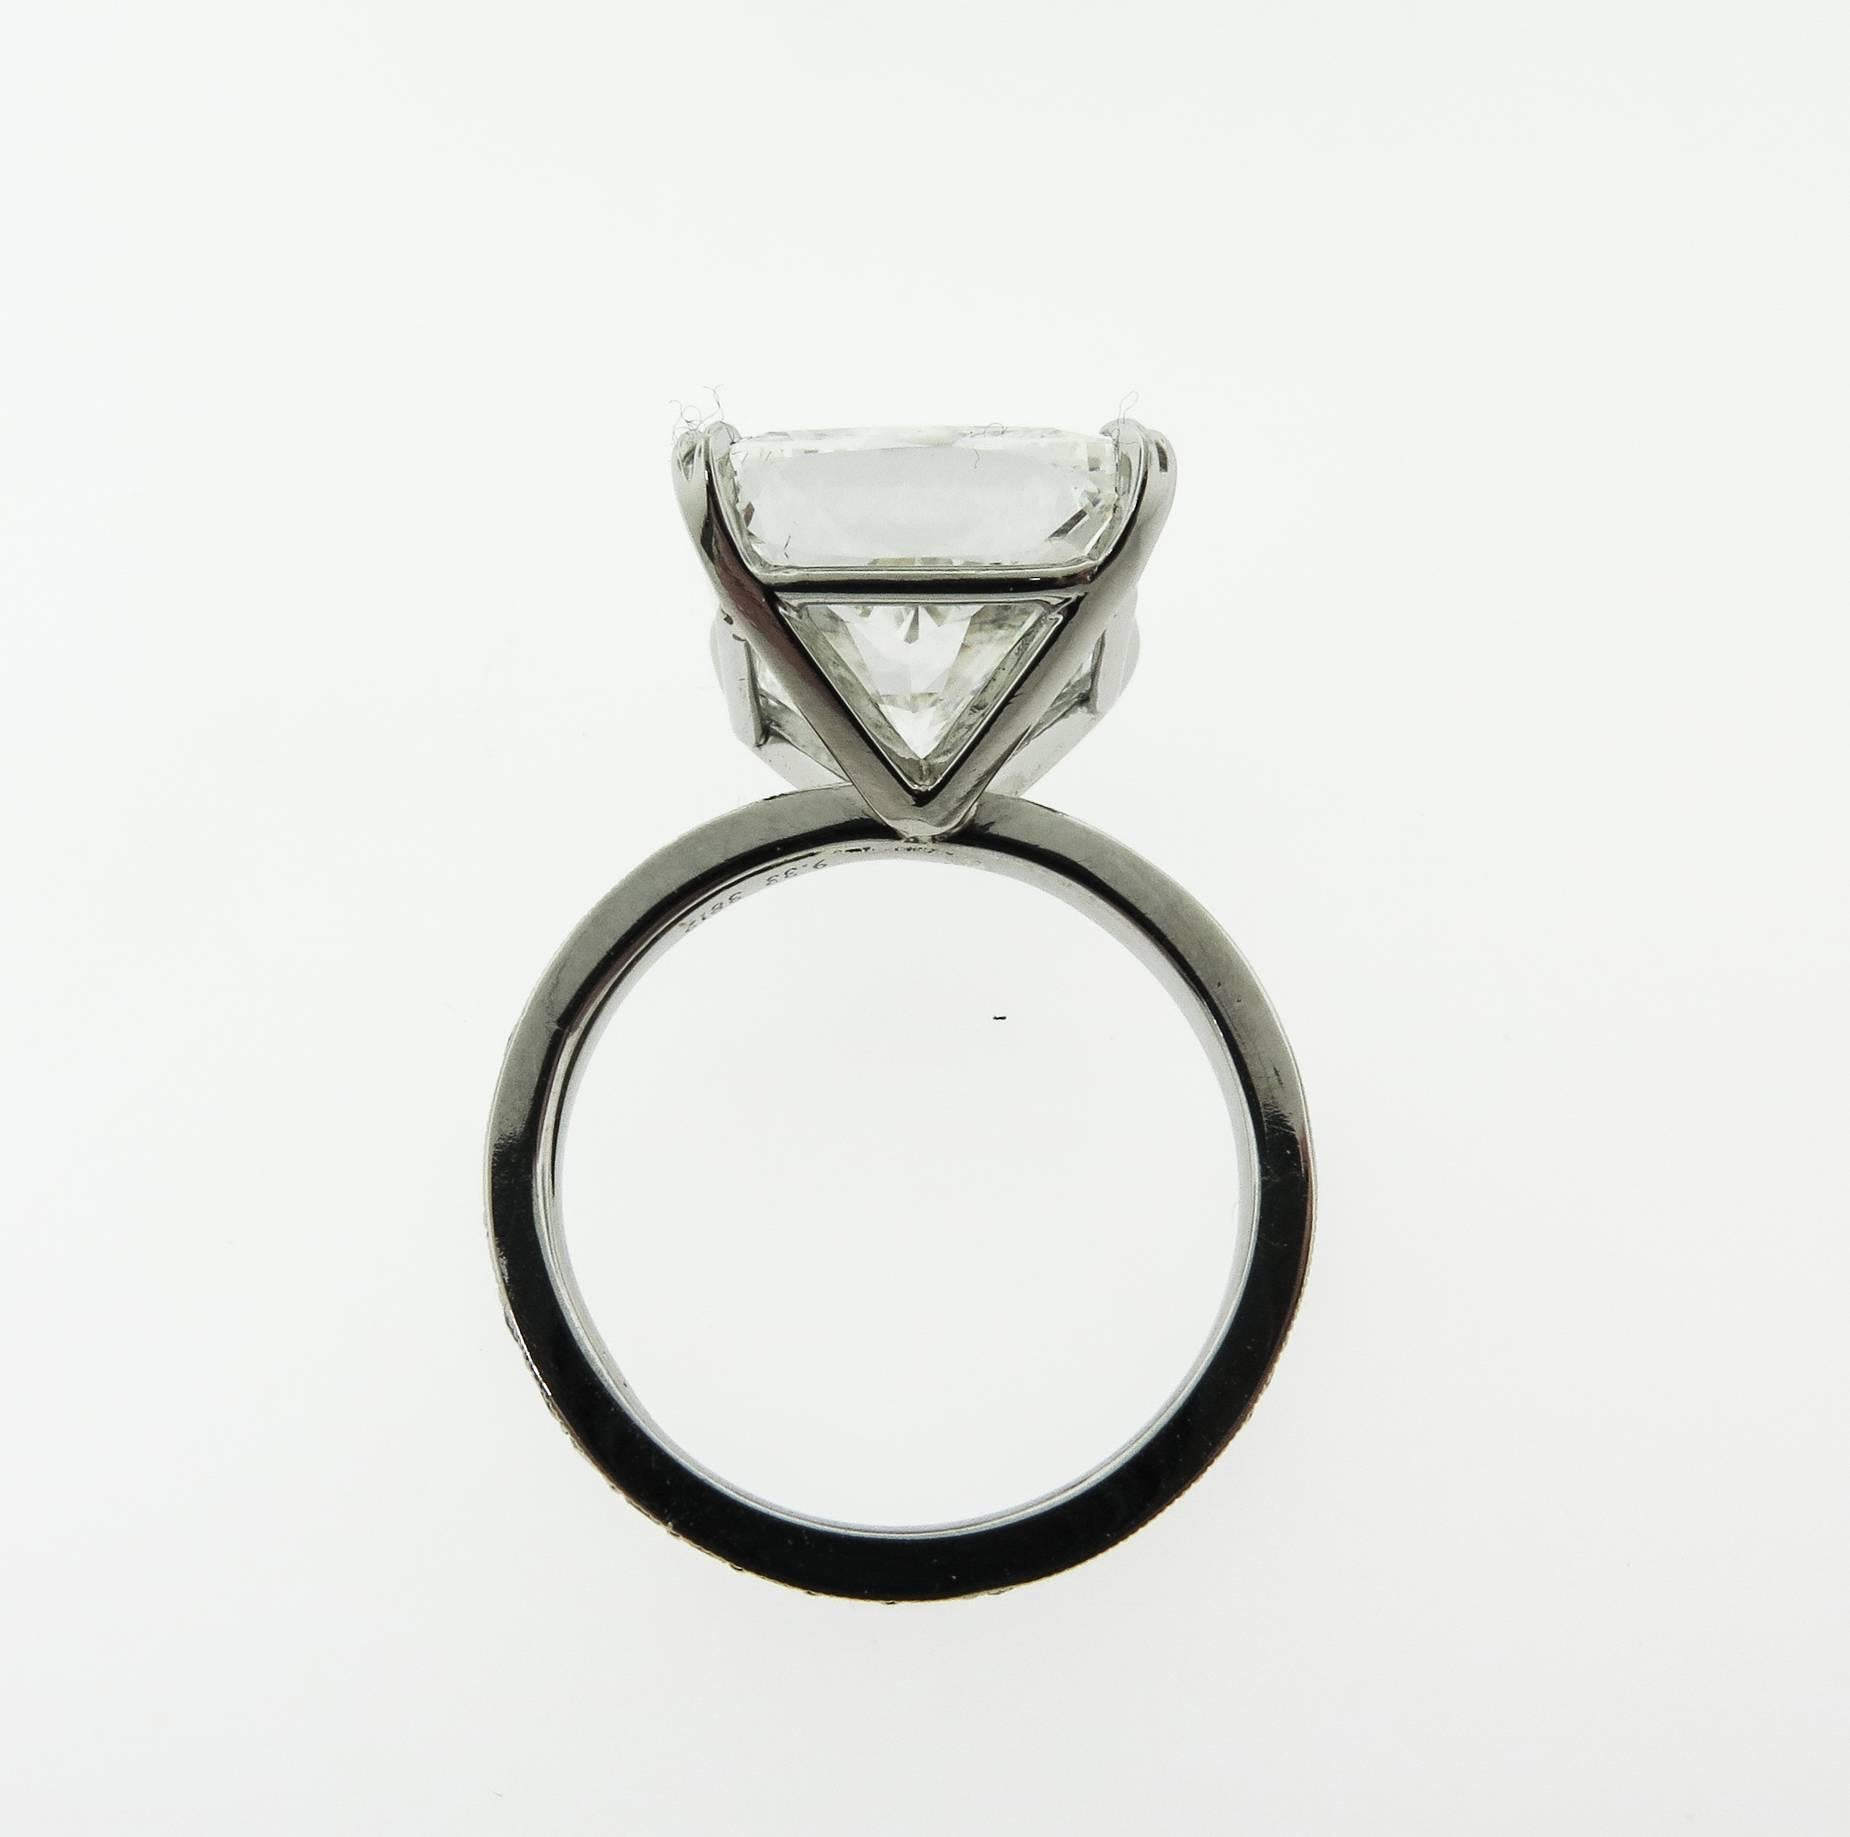 10 carat cushion cut diamond ring